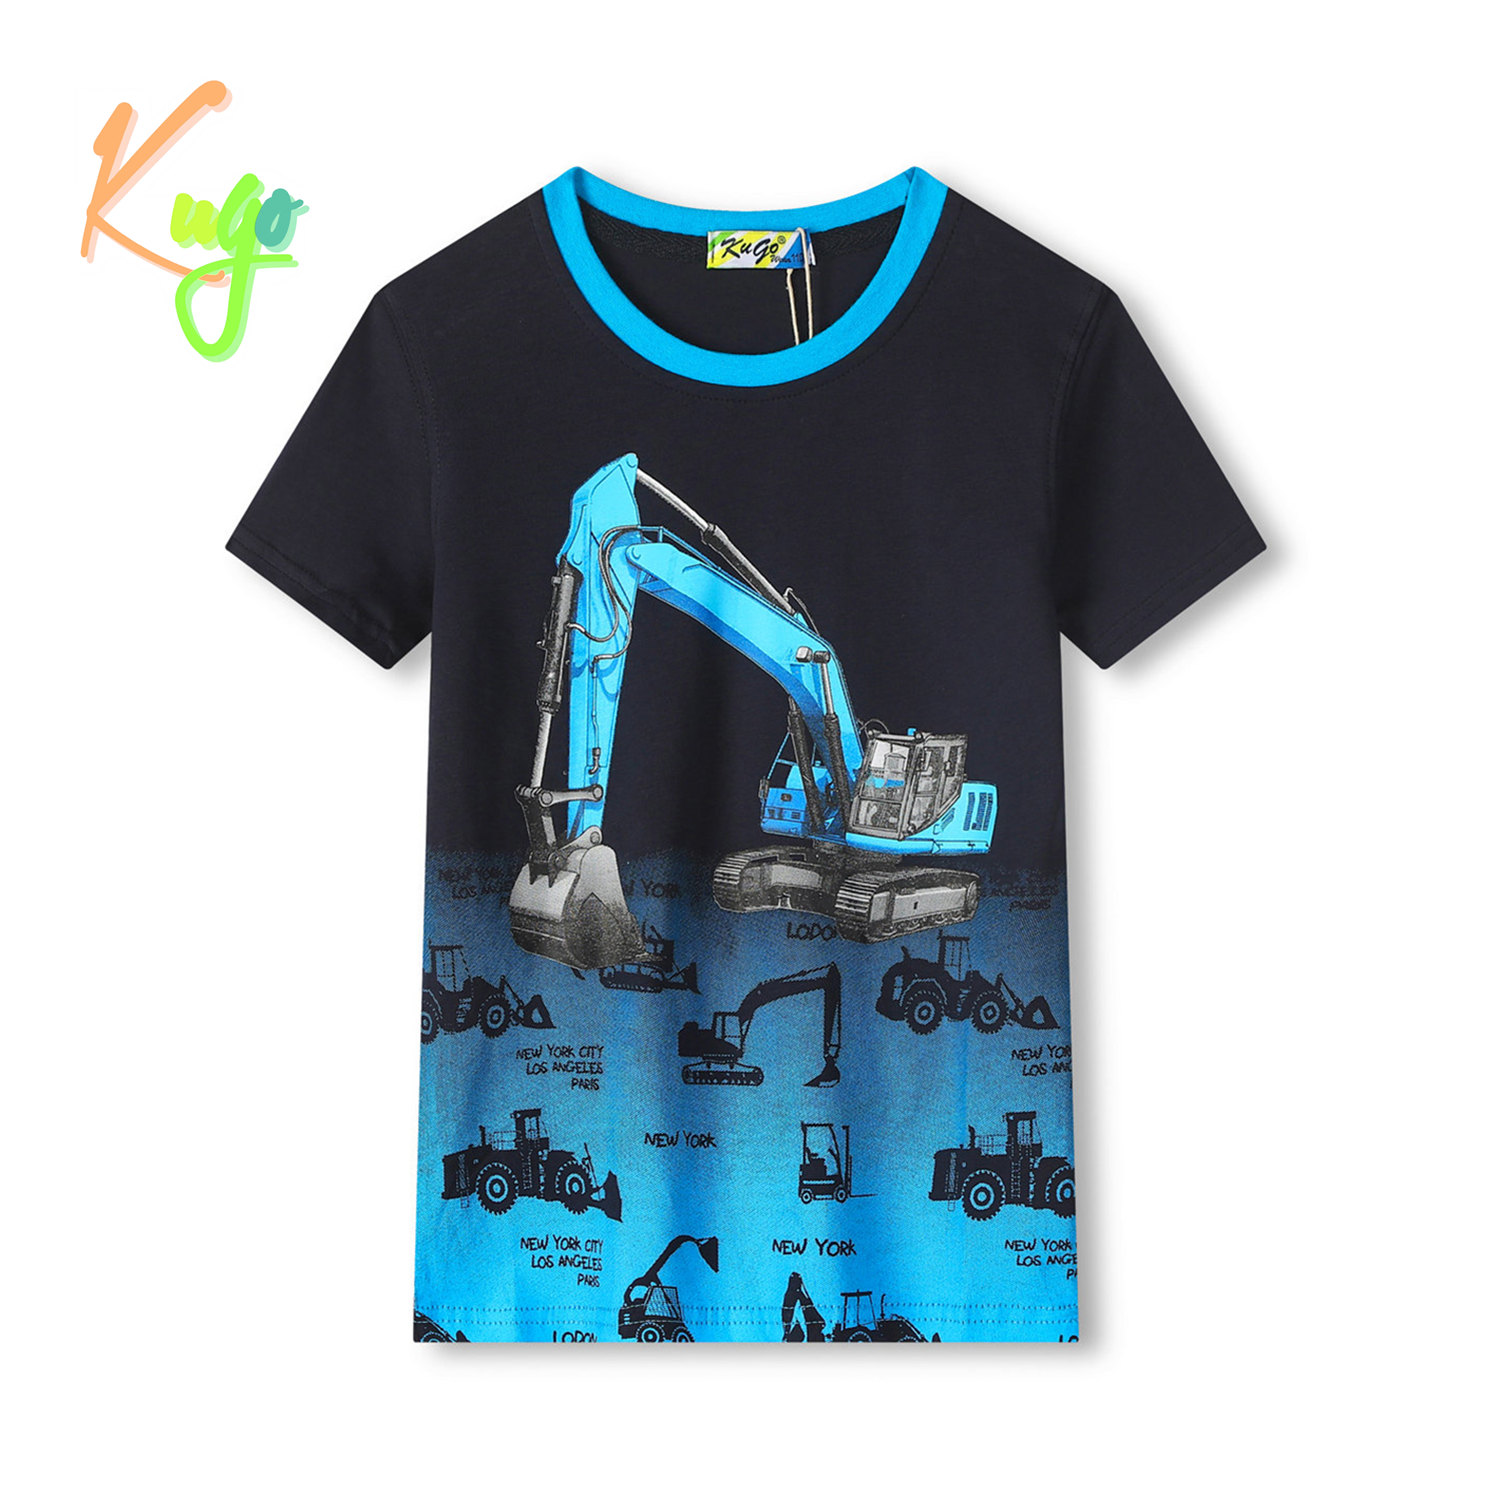 Chlapecké tričko - KUGO TM8570C, tmavě modrá Barva: Modrá tmavě, Velikost: 98